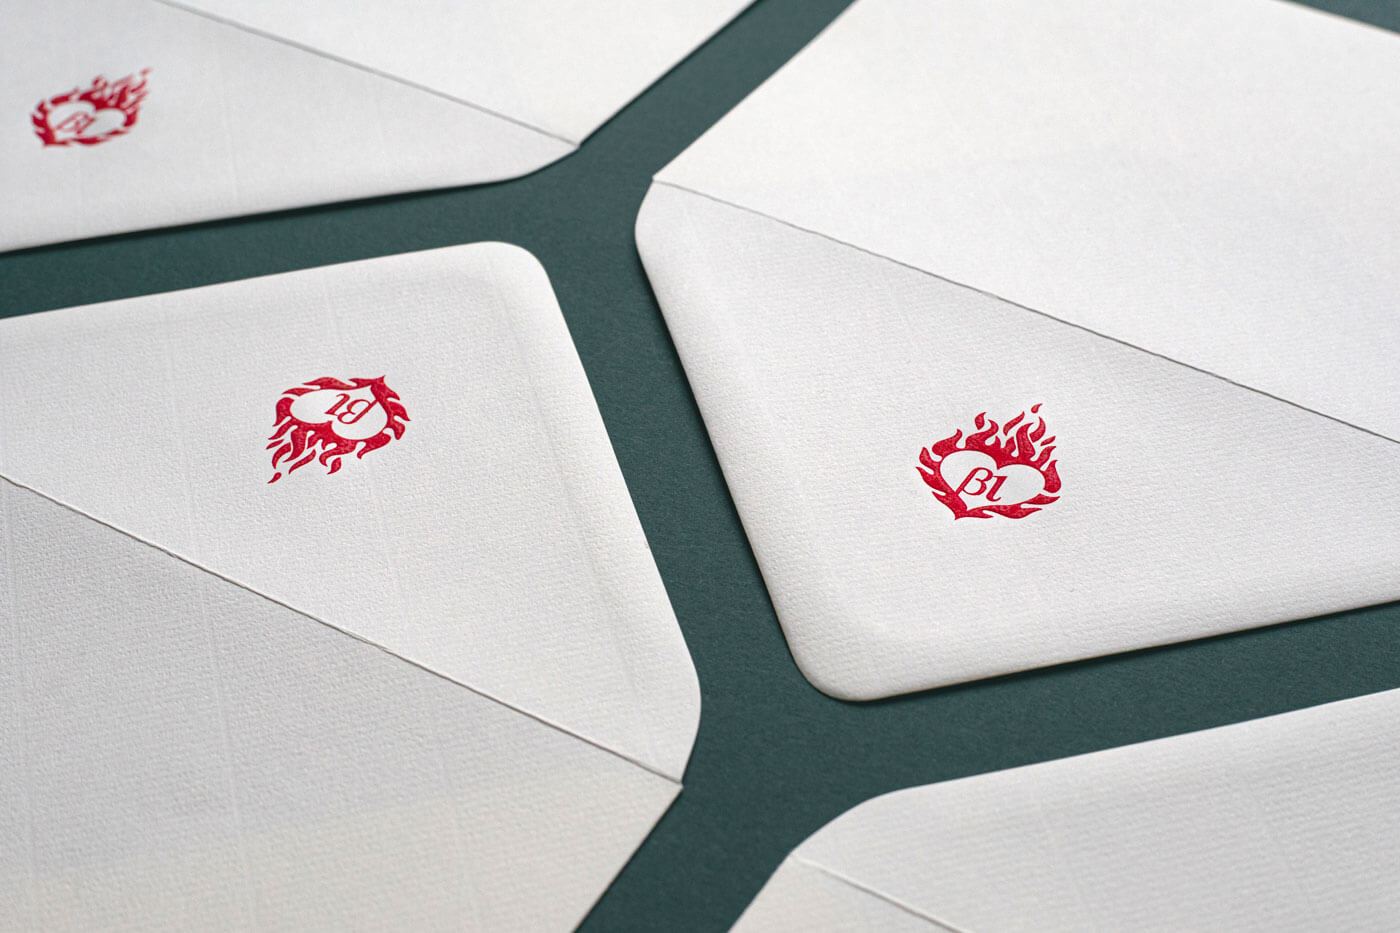 luxury die stamped engraved red logo on white envelopes